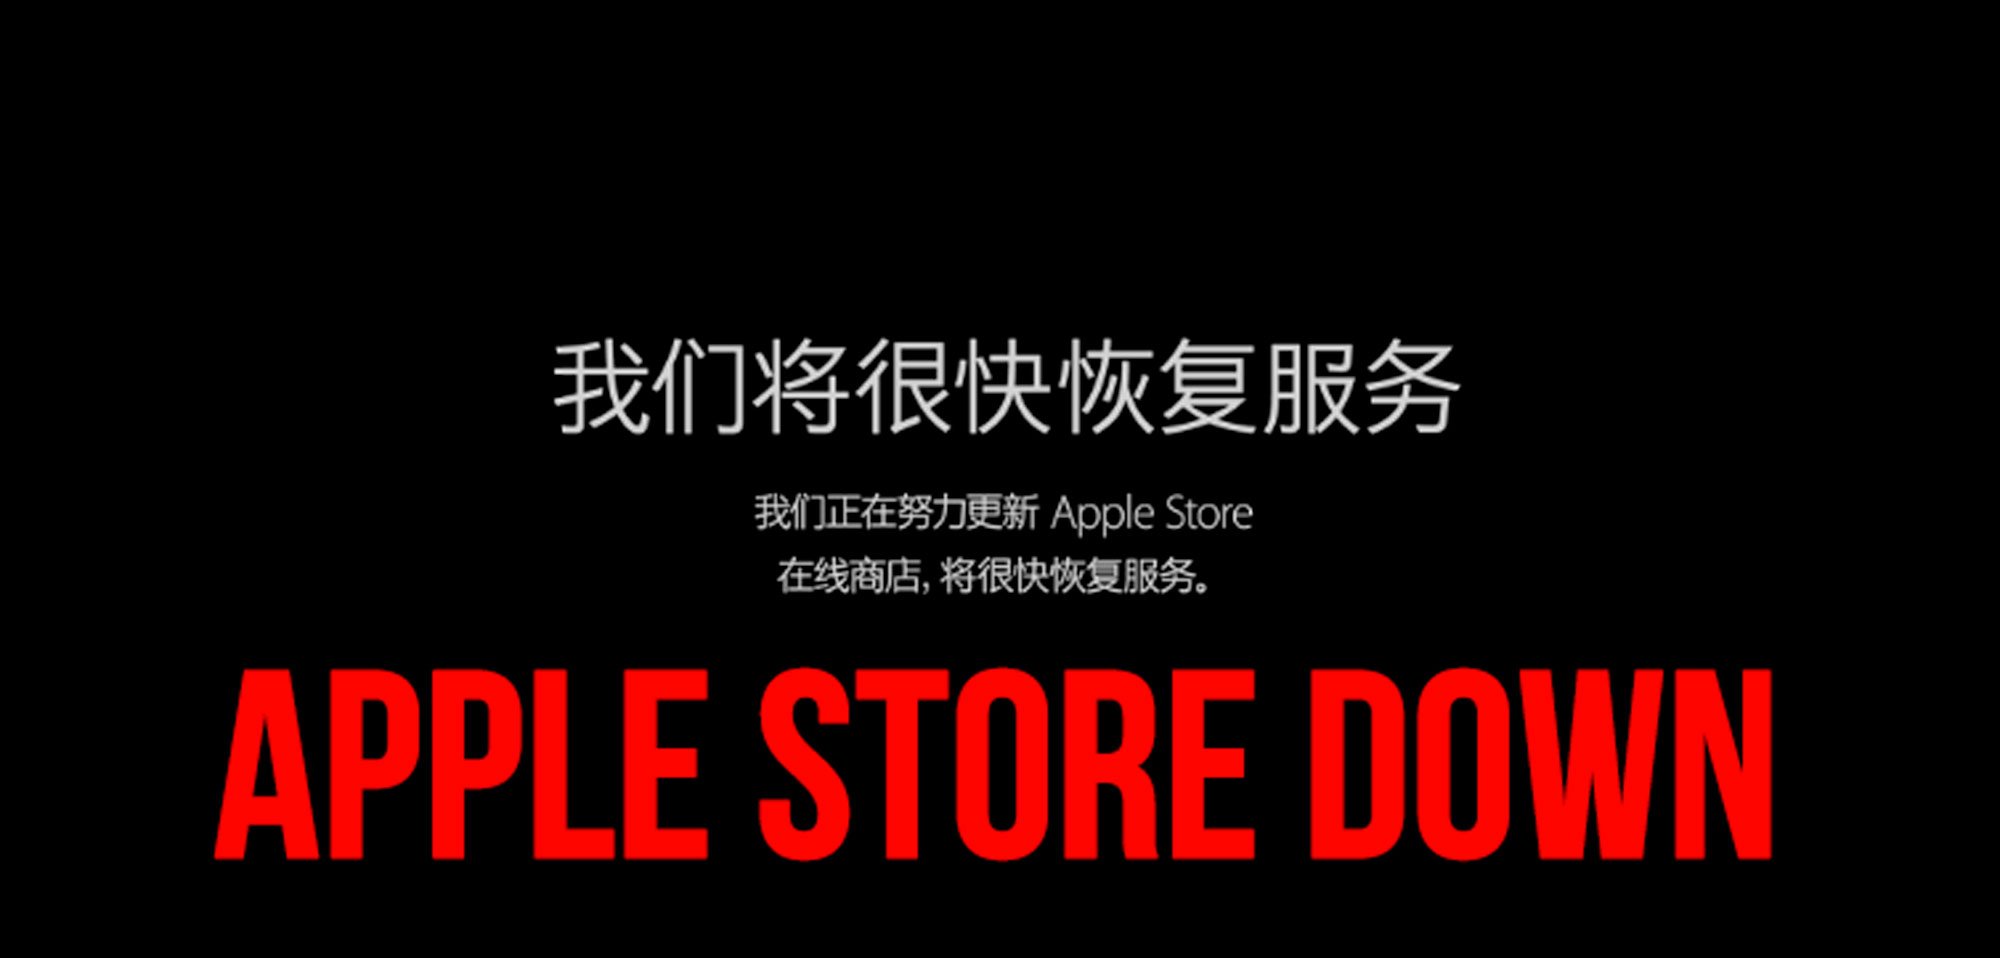 Apple Store down: Neue iPads und iMacs! 10